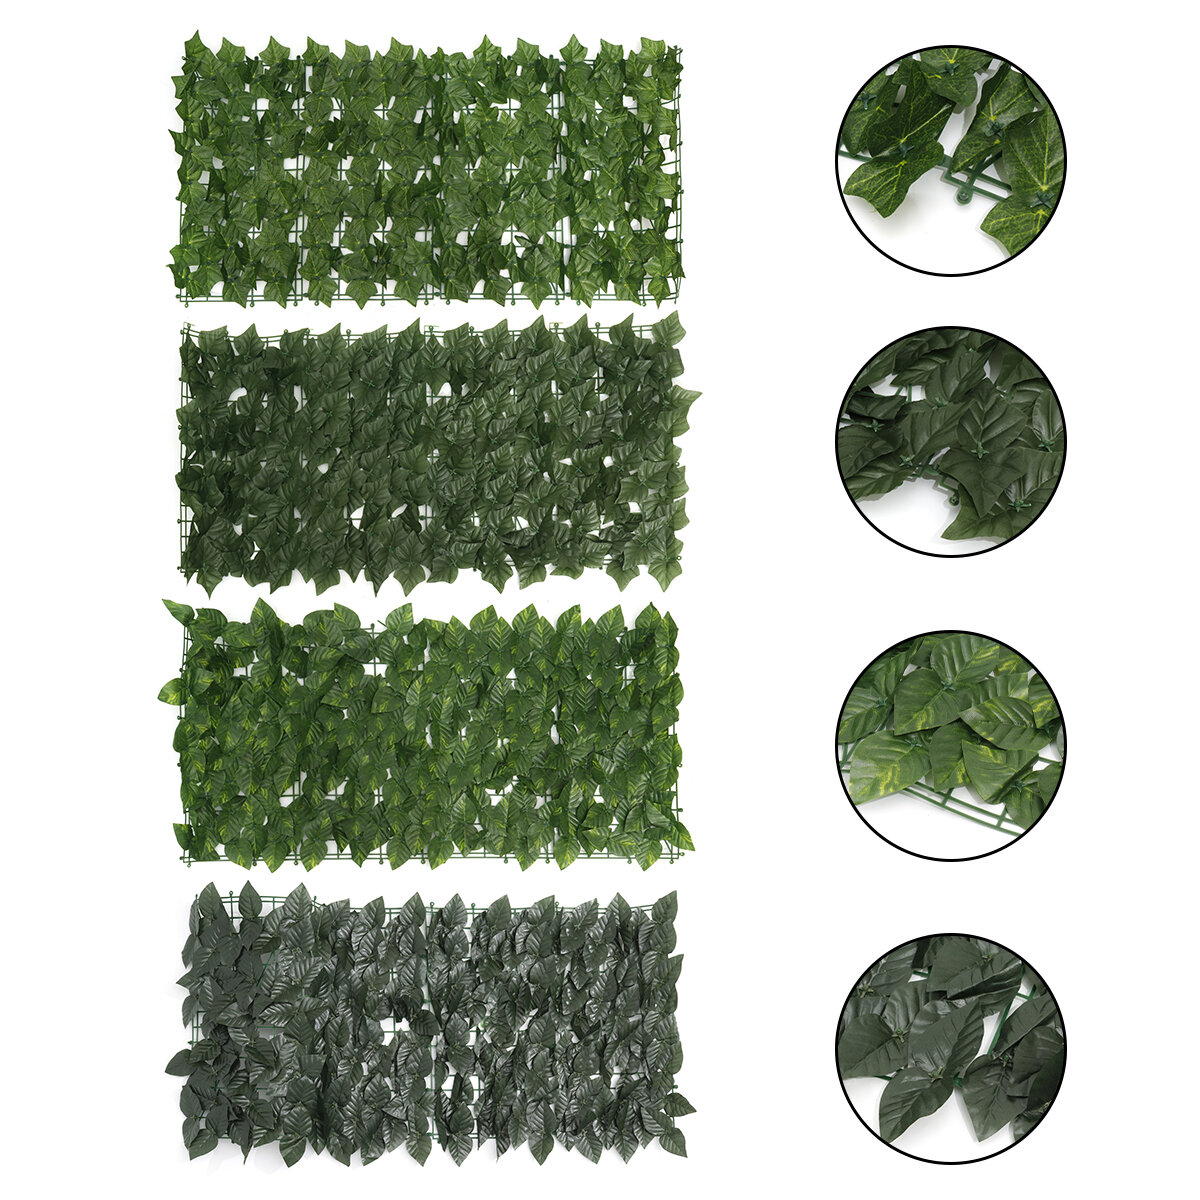 0.5M Outdoor Kunstmatige Faux Ivy Leaf Privacy Hek Scherm Decor Panelen Hedge Garden Wall Cover